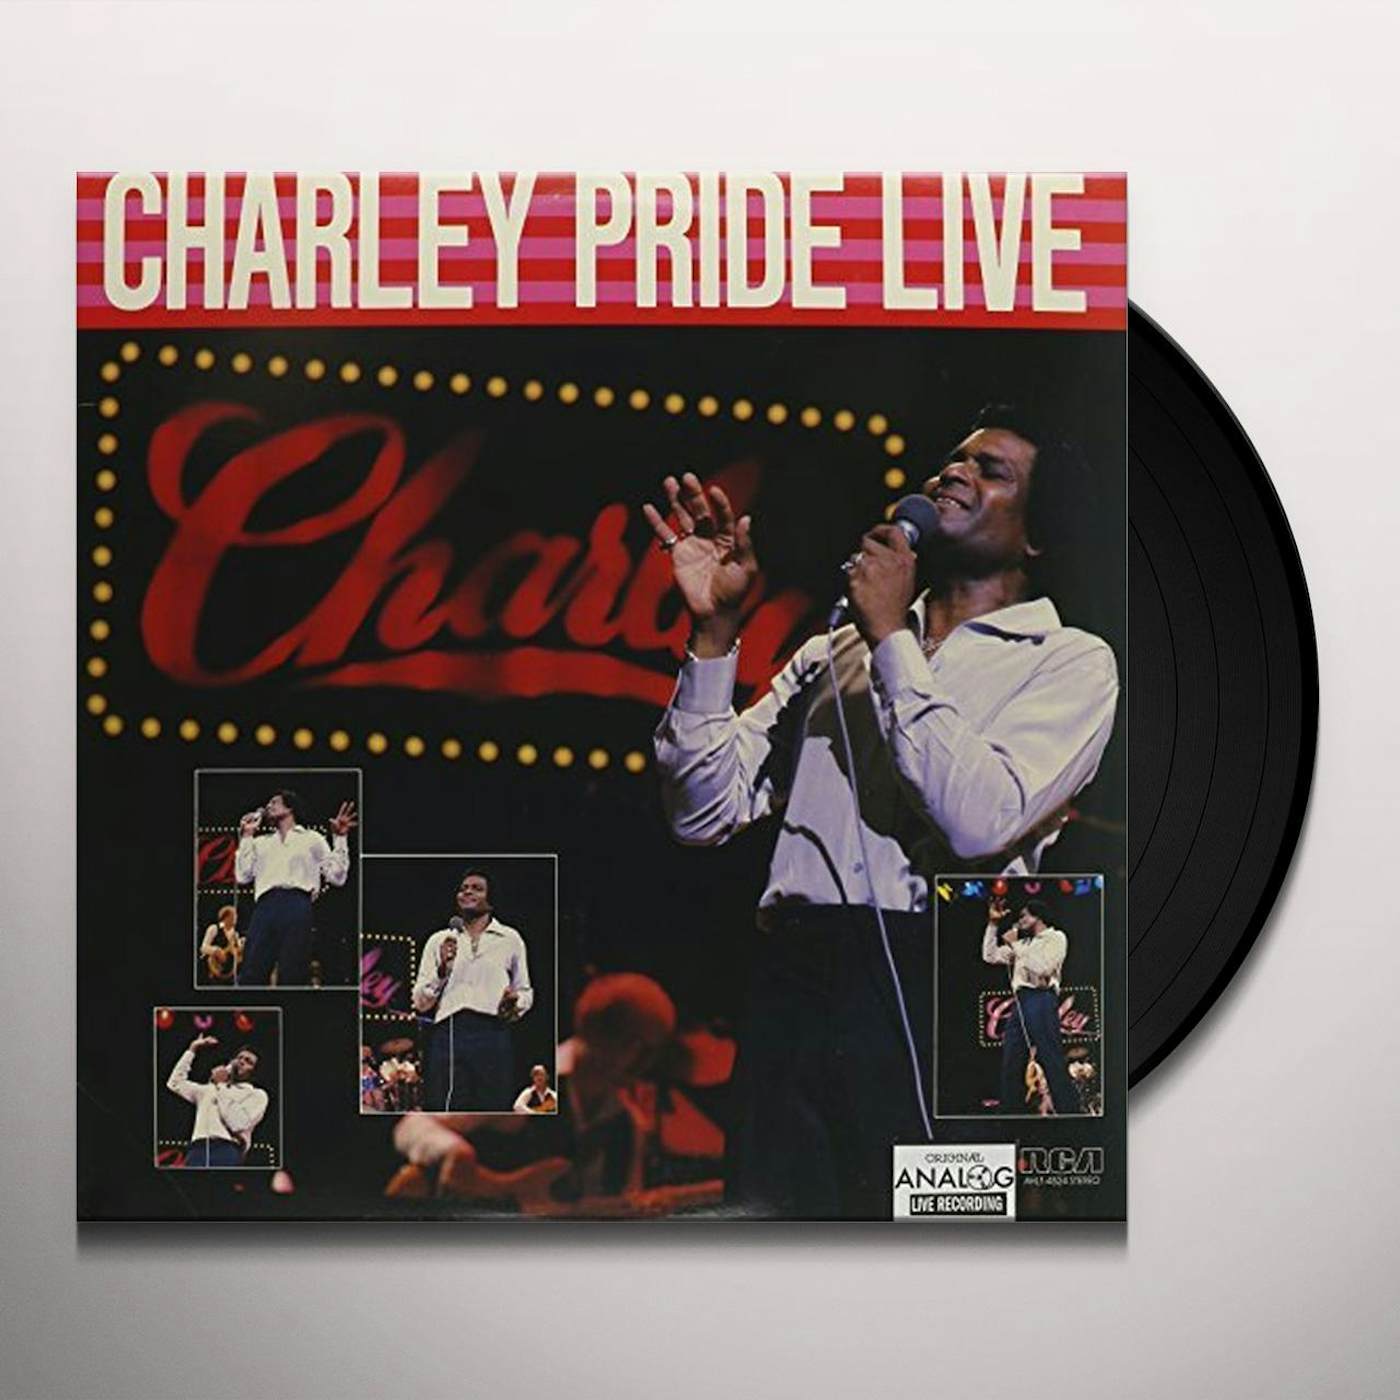 Charley Pride Live Vinyl Record